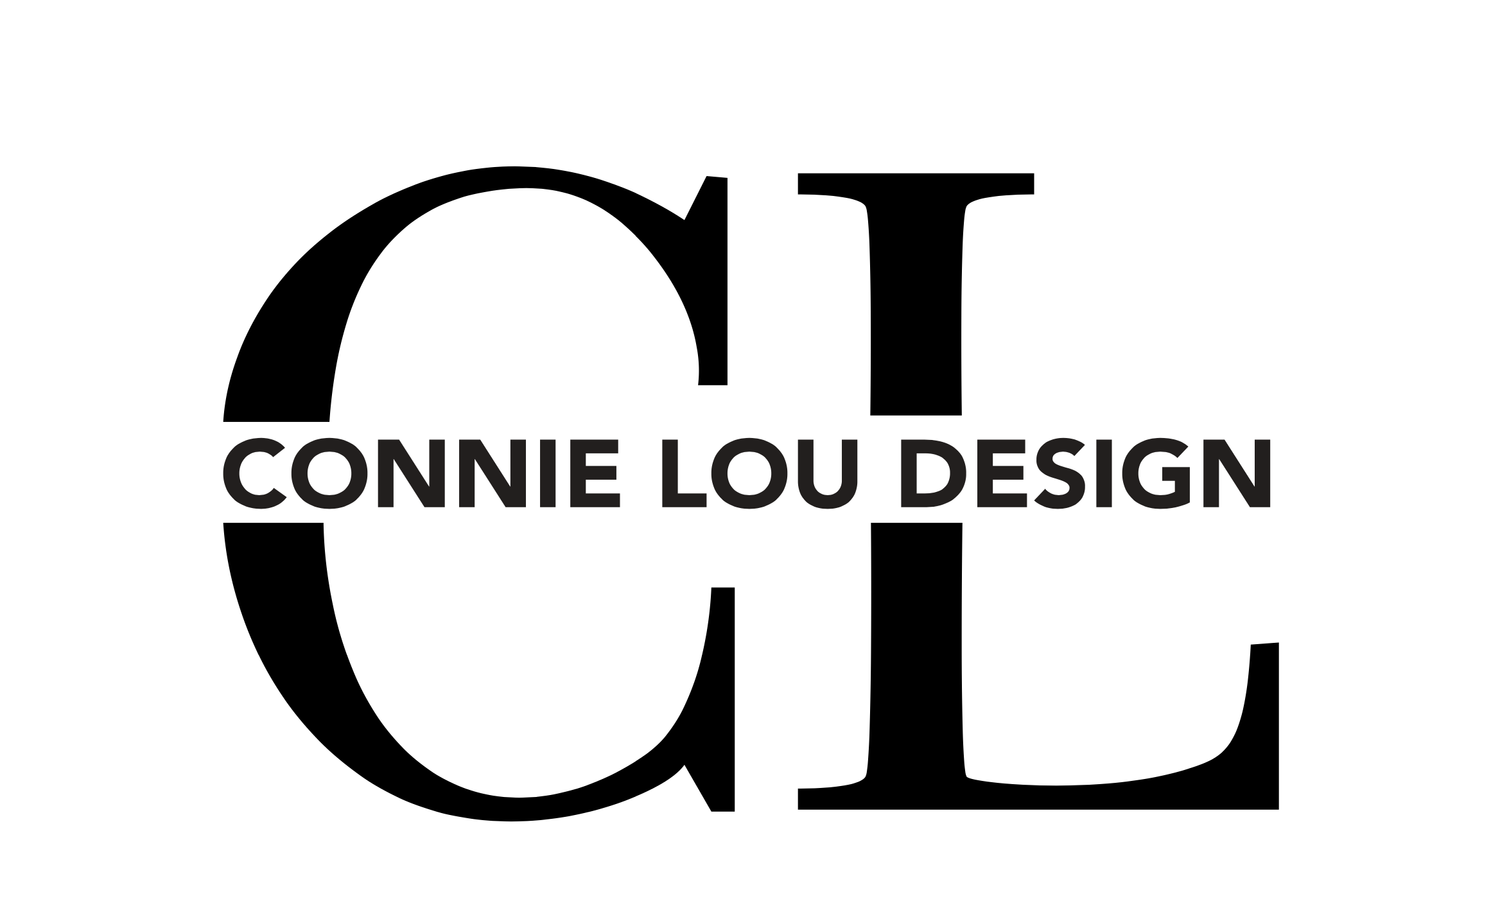 Connie Lou Design